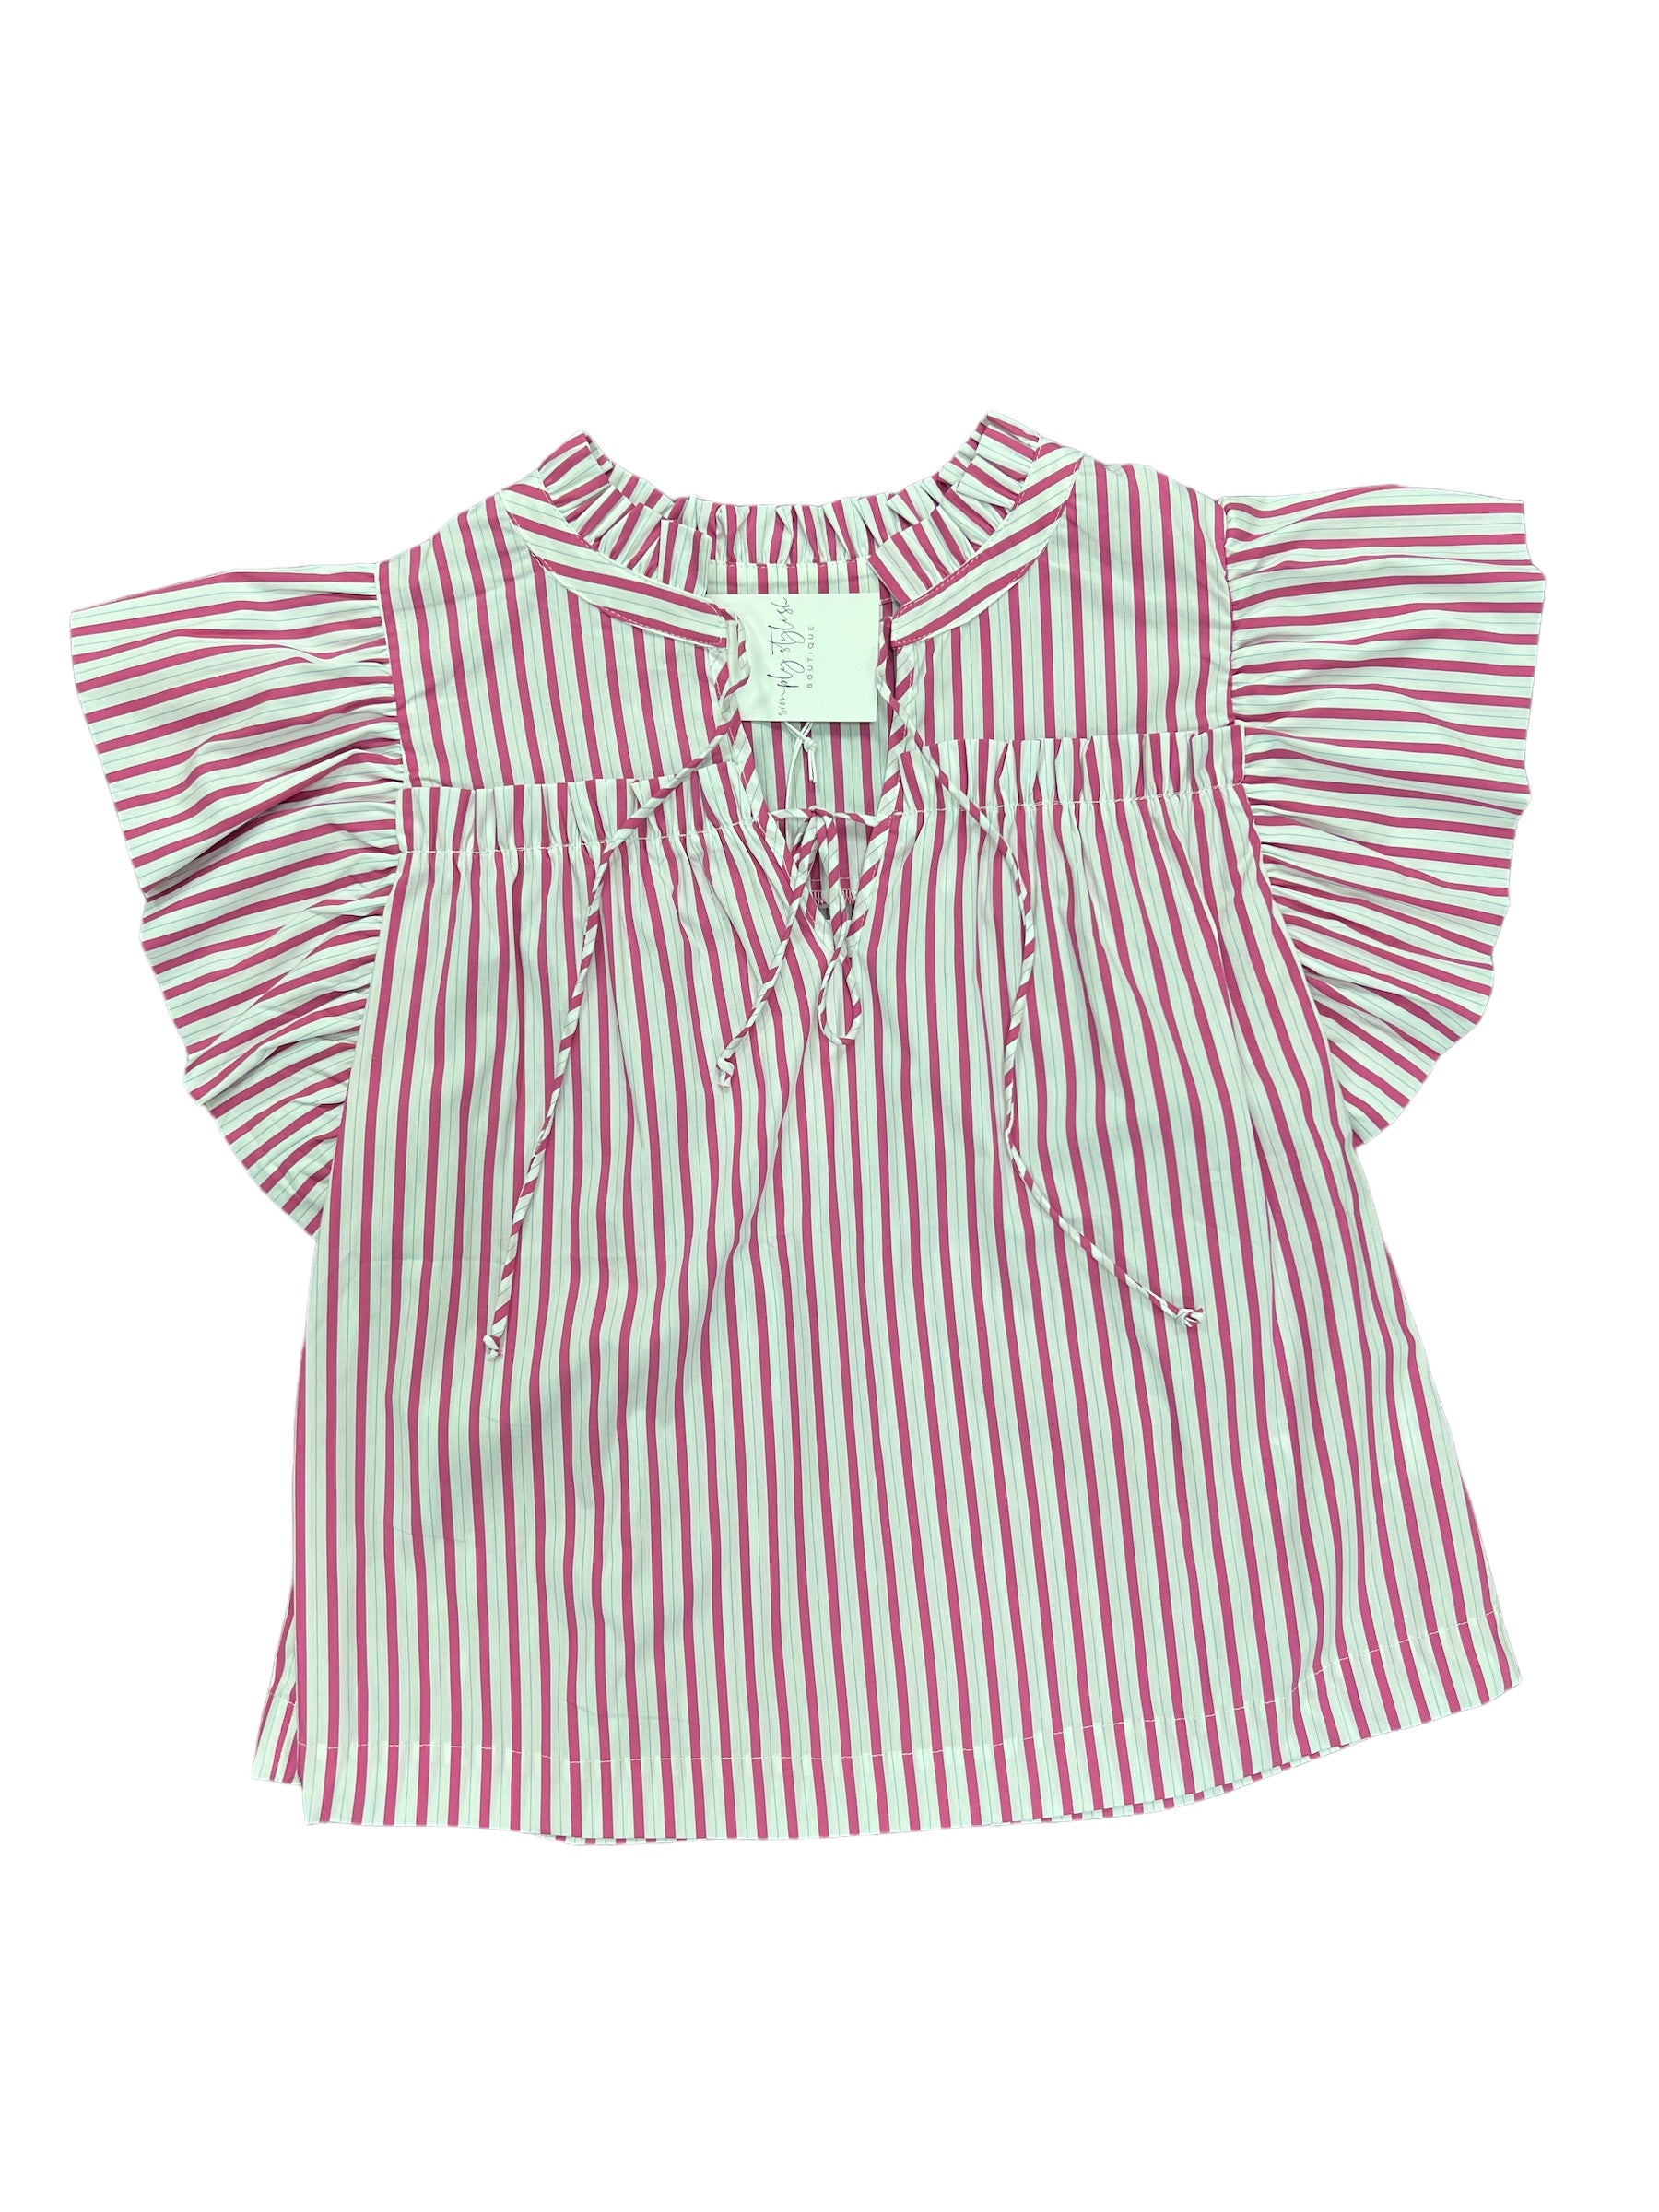 Siena Top-130 Dressy Tops & Blouses-Dear John-Simply Stylish Boutique | Women’s & Kid’s Fashion | Paducah, KY